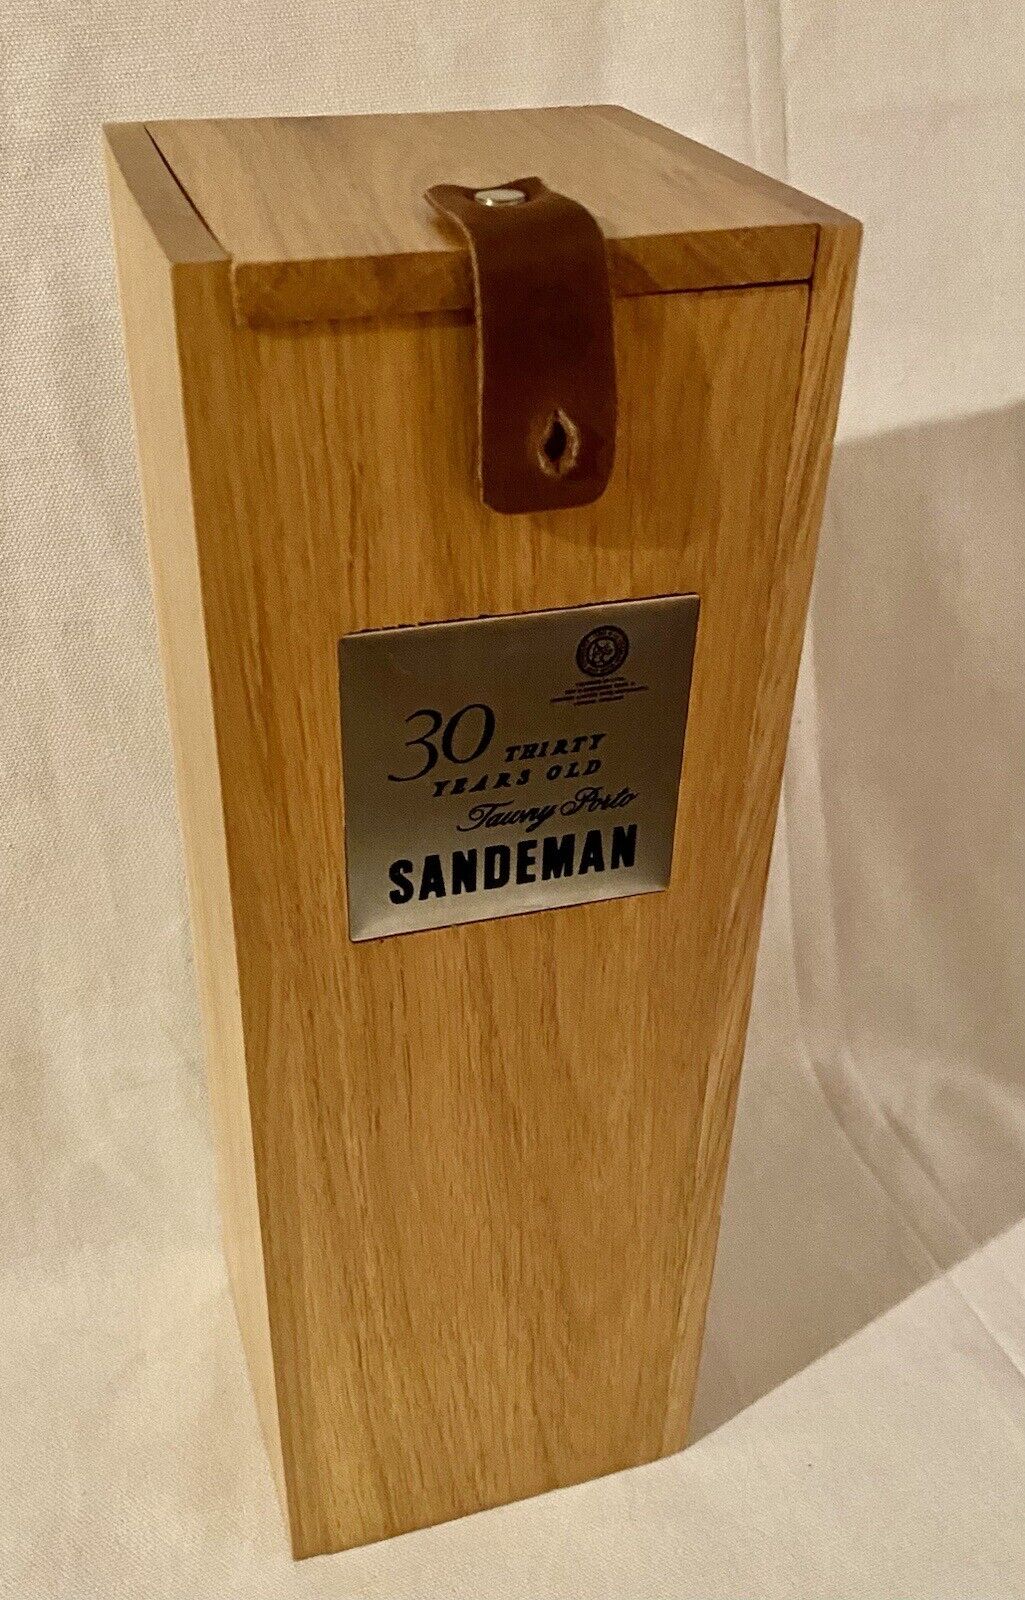 Very Rare Vintage Sandeman 30 Year Old Tawney Port box (empty, no bottle)